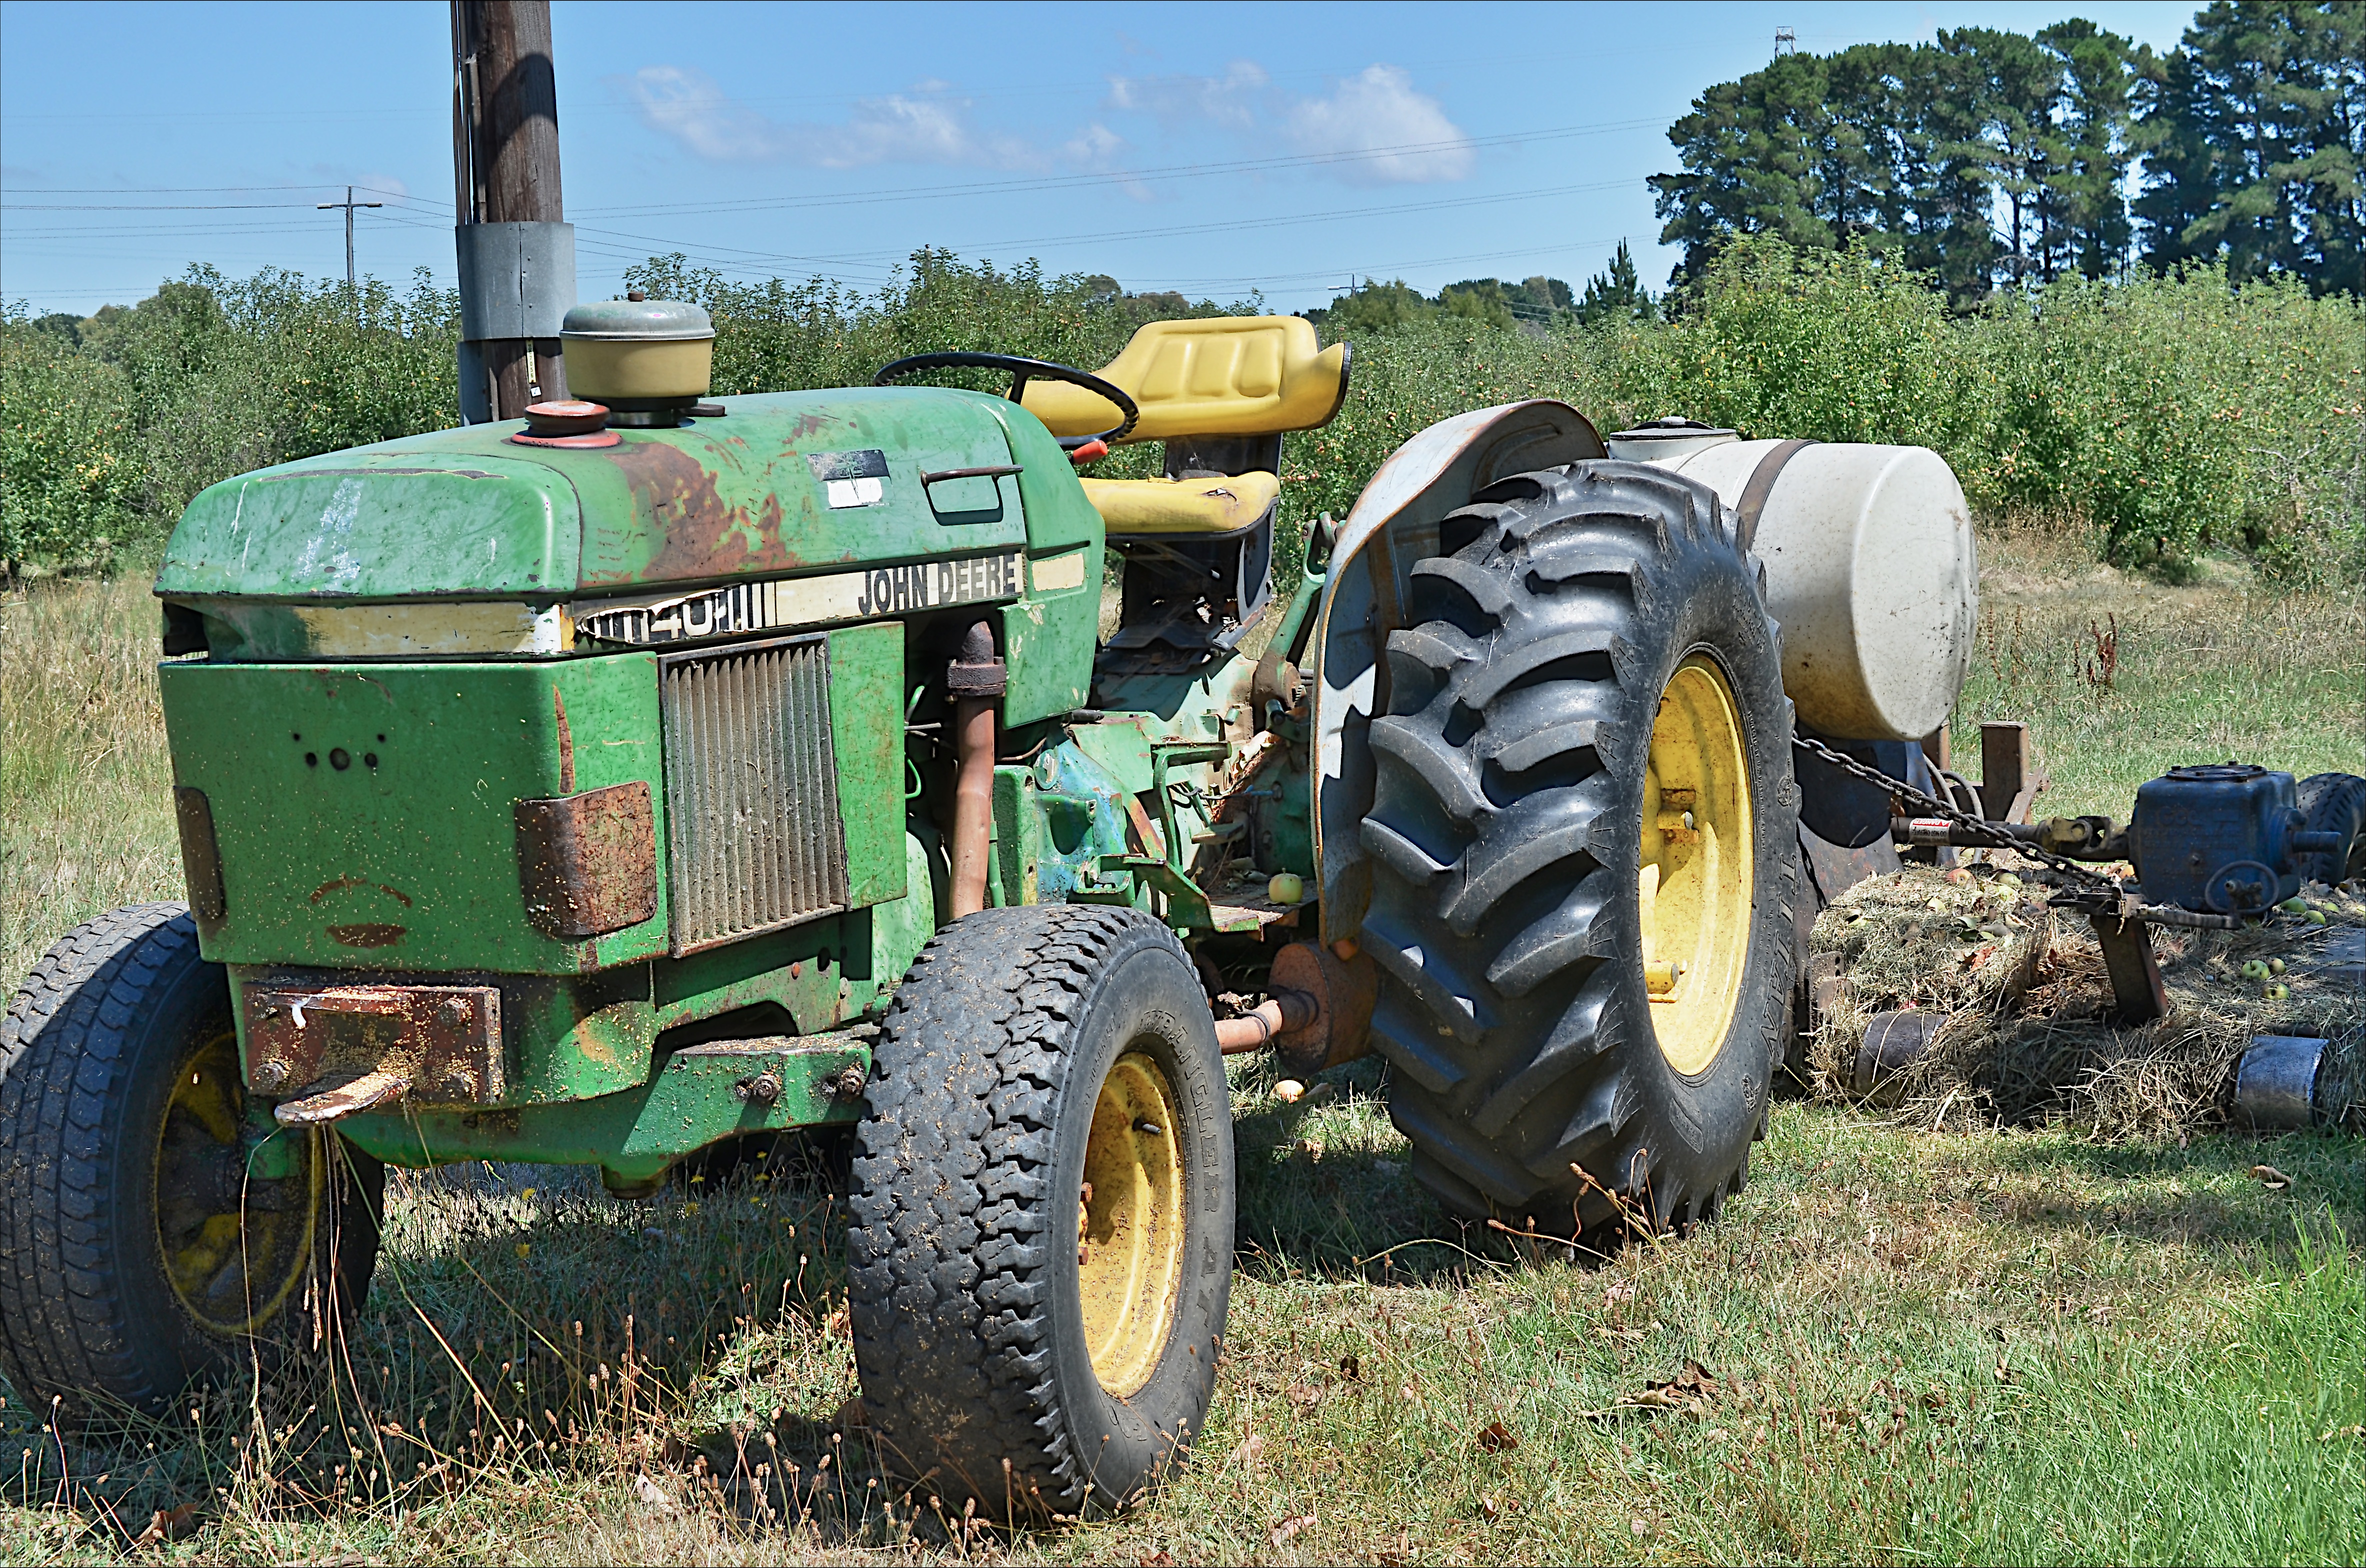 Old John Deere tractor | Flickr - Photo Sharing!